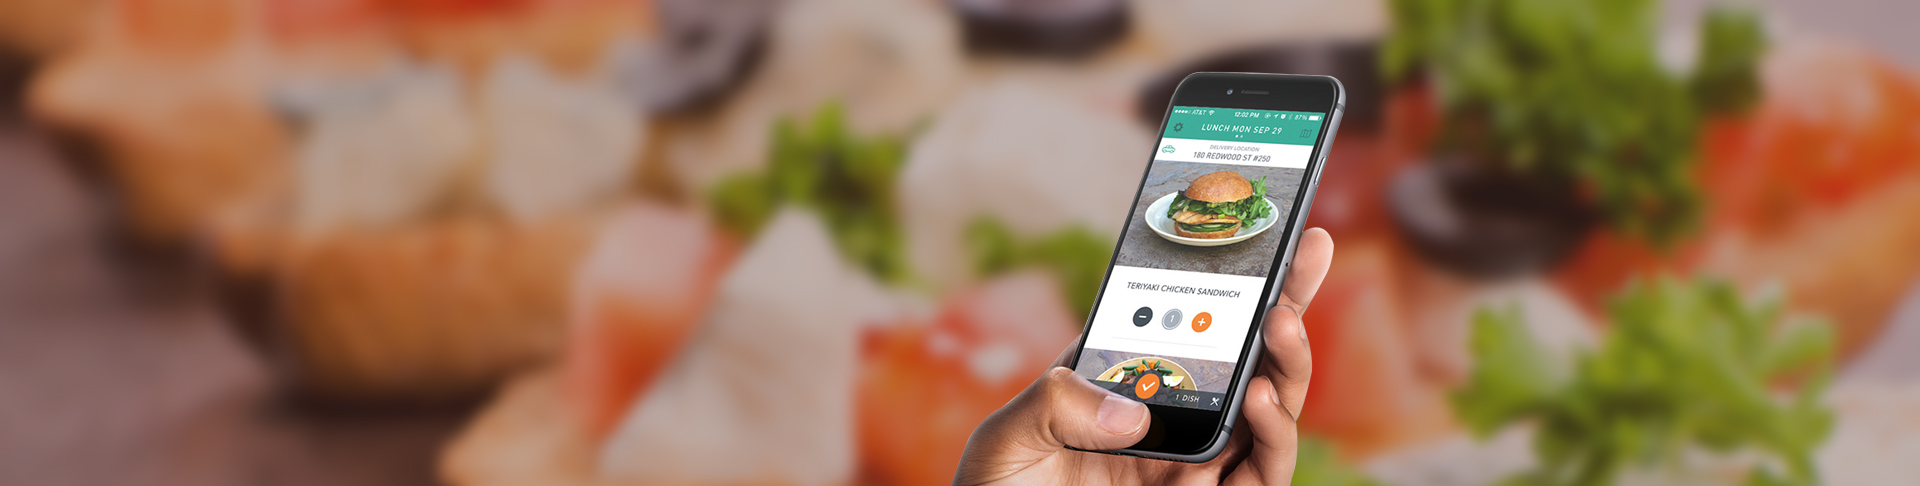 Food Ordering App Development